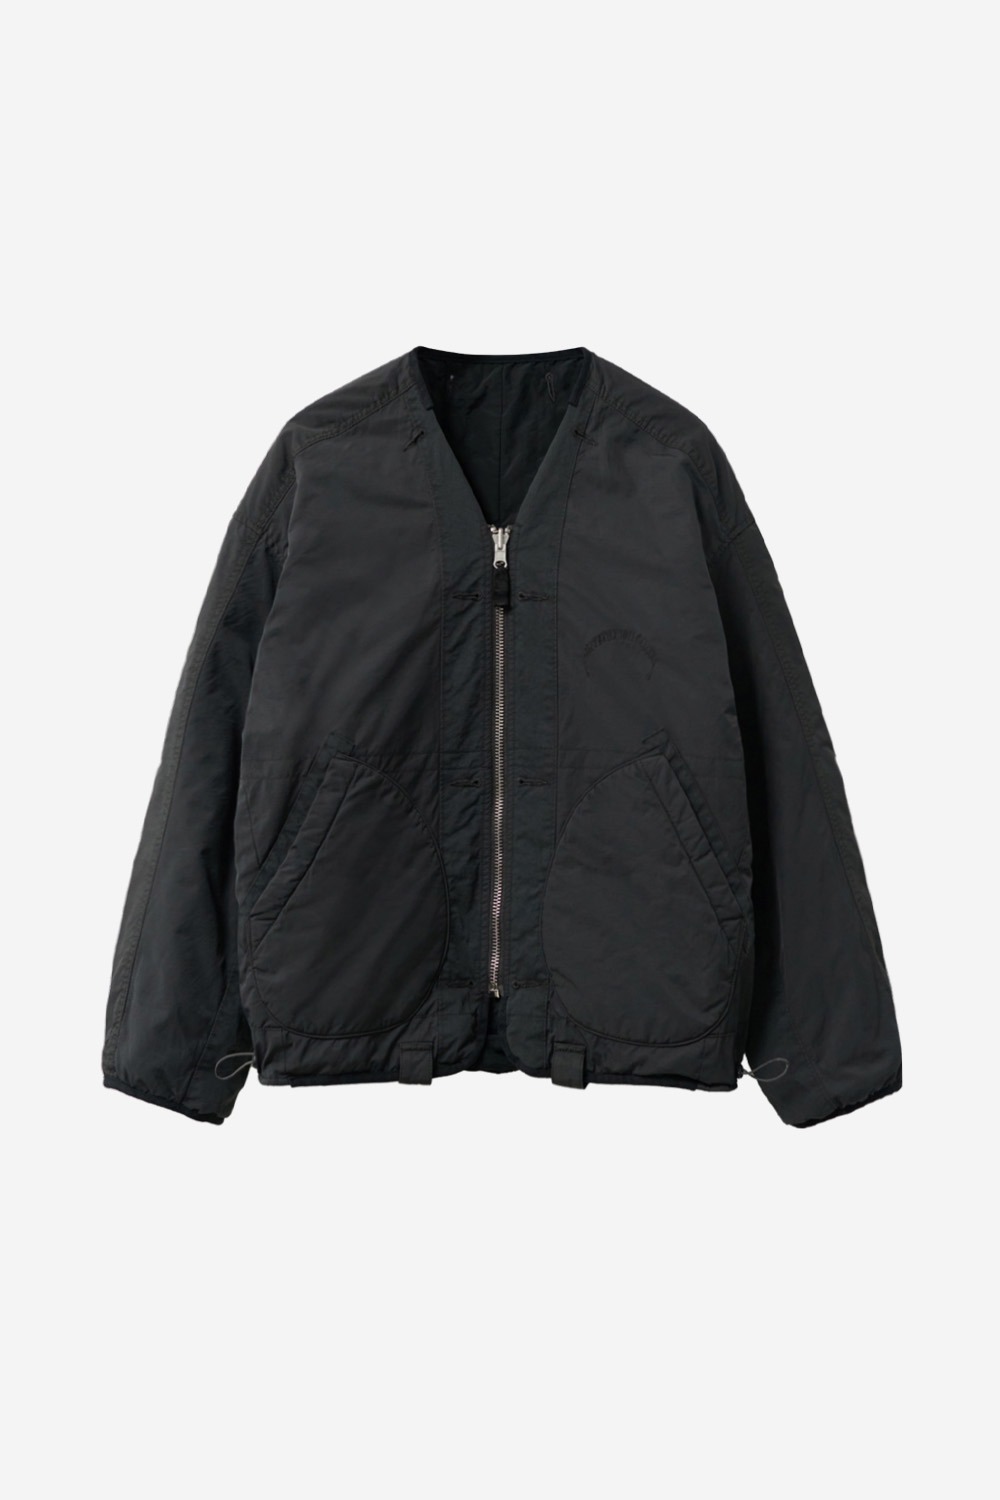 1011 Reversible Liner Jacket-Multi Charcoal (Used Black)